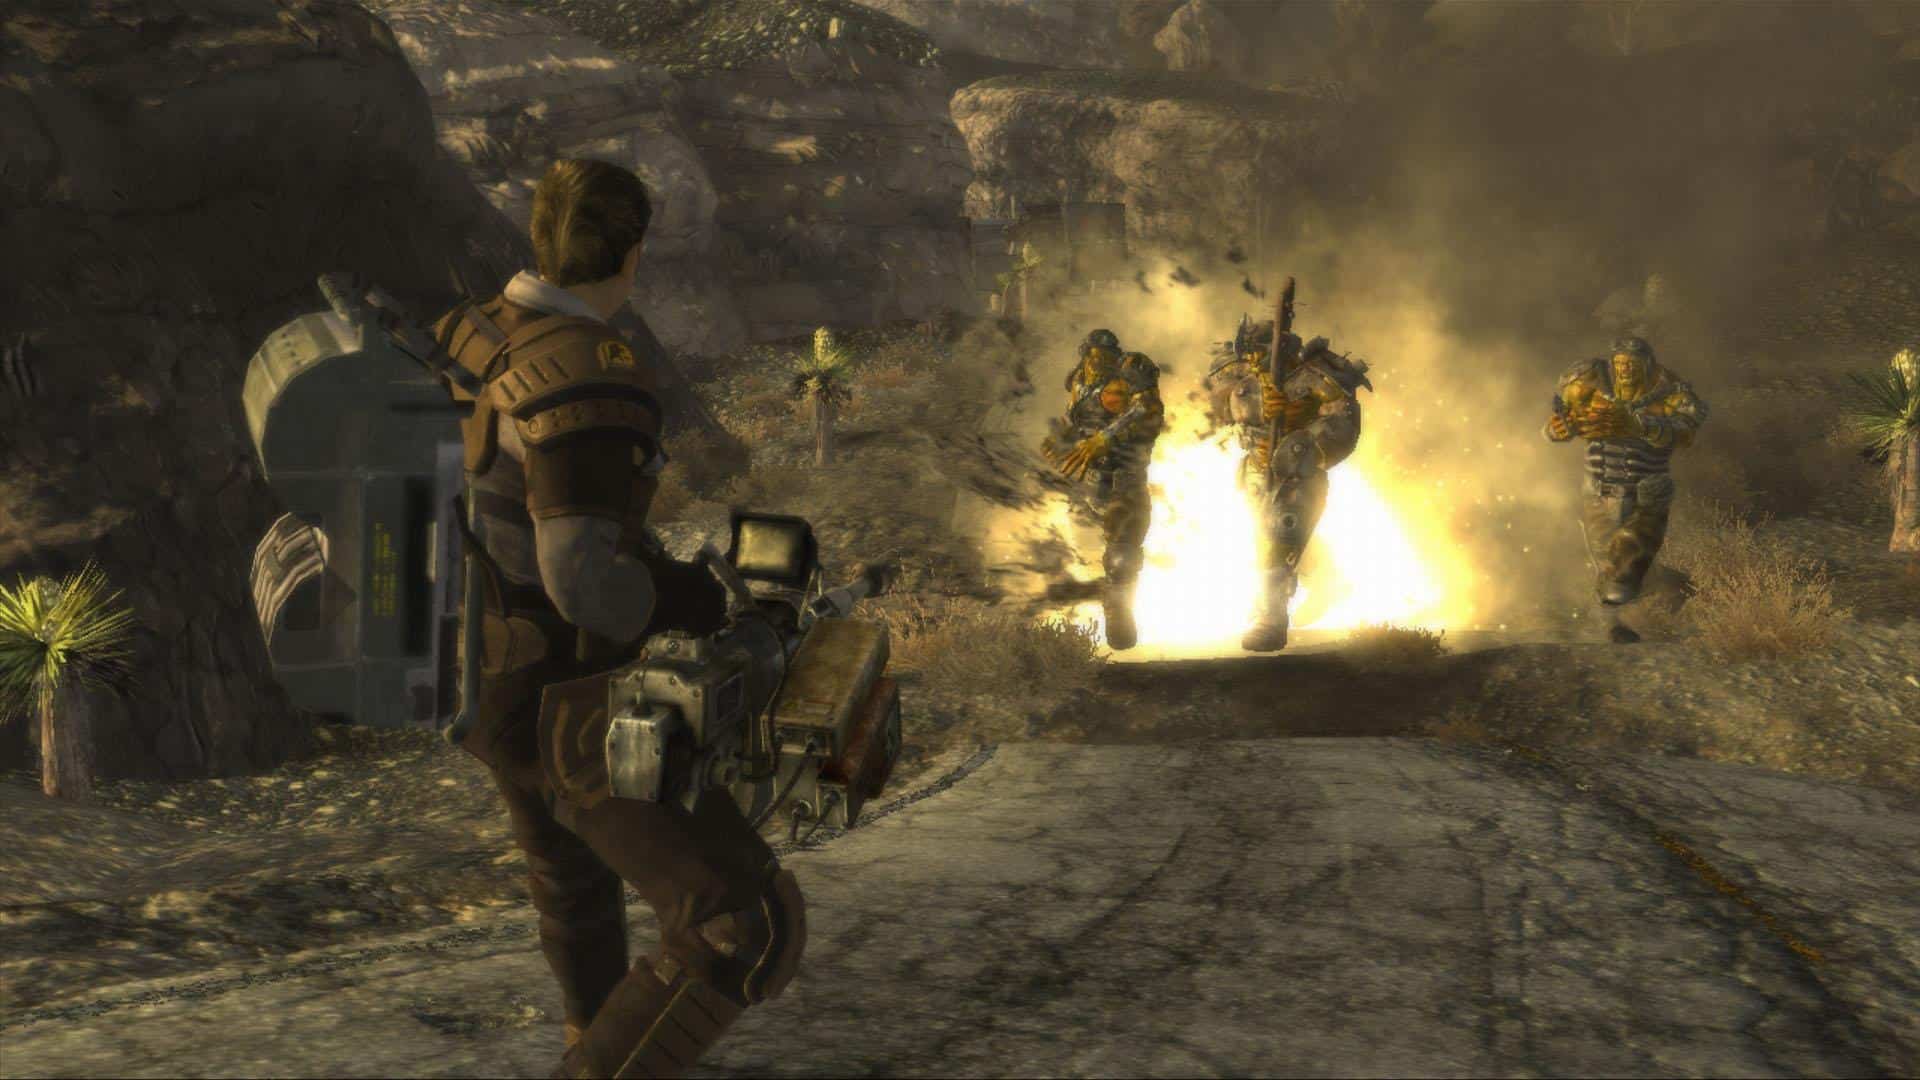 Fallout New Vegas Fallout 3のスピンオフ作品 オープンワールドの世界で自由に物語を進められる 今から遊んでも楽しい名作pcゲームです ネトゲ廃人が厳選したpcオンラインゲームおすすめ Mmorpg Fps Pcゲームの人気作